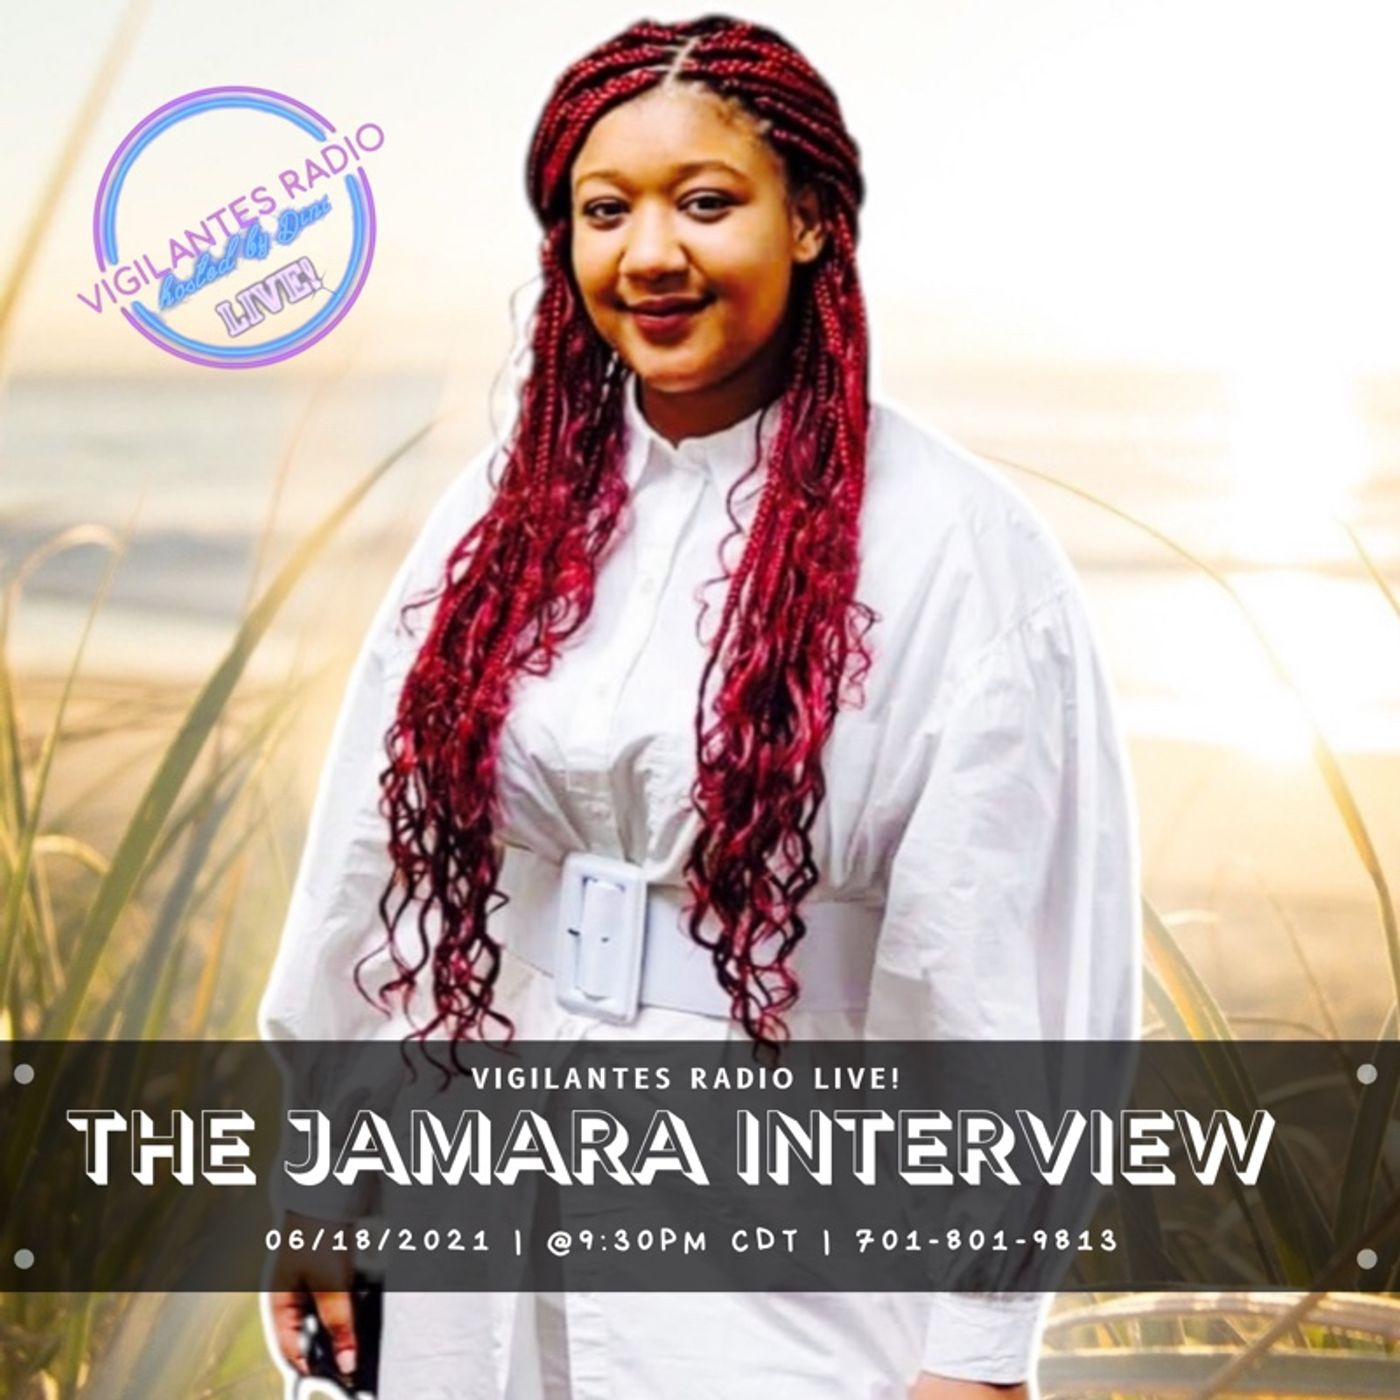 The Jamara Interview. Image